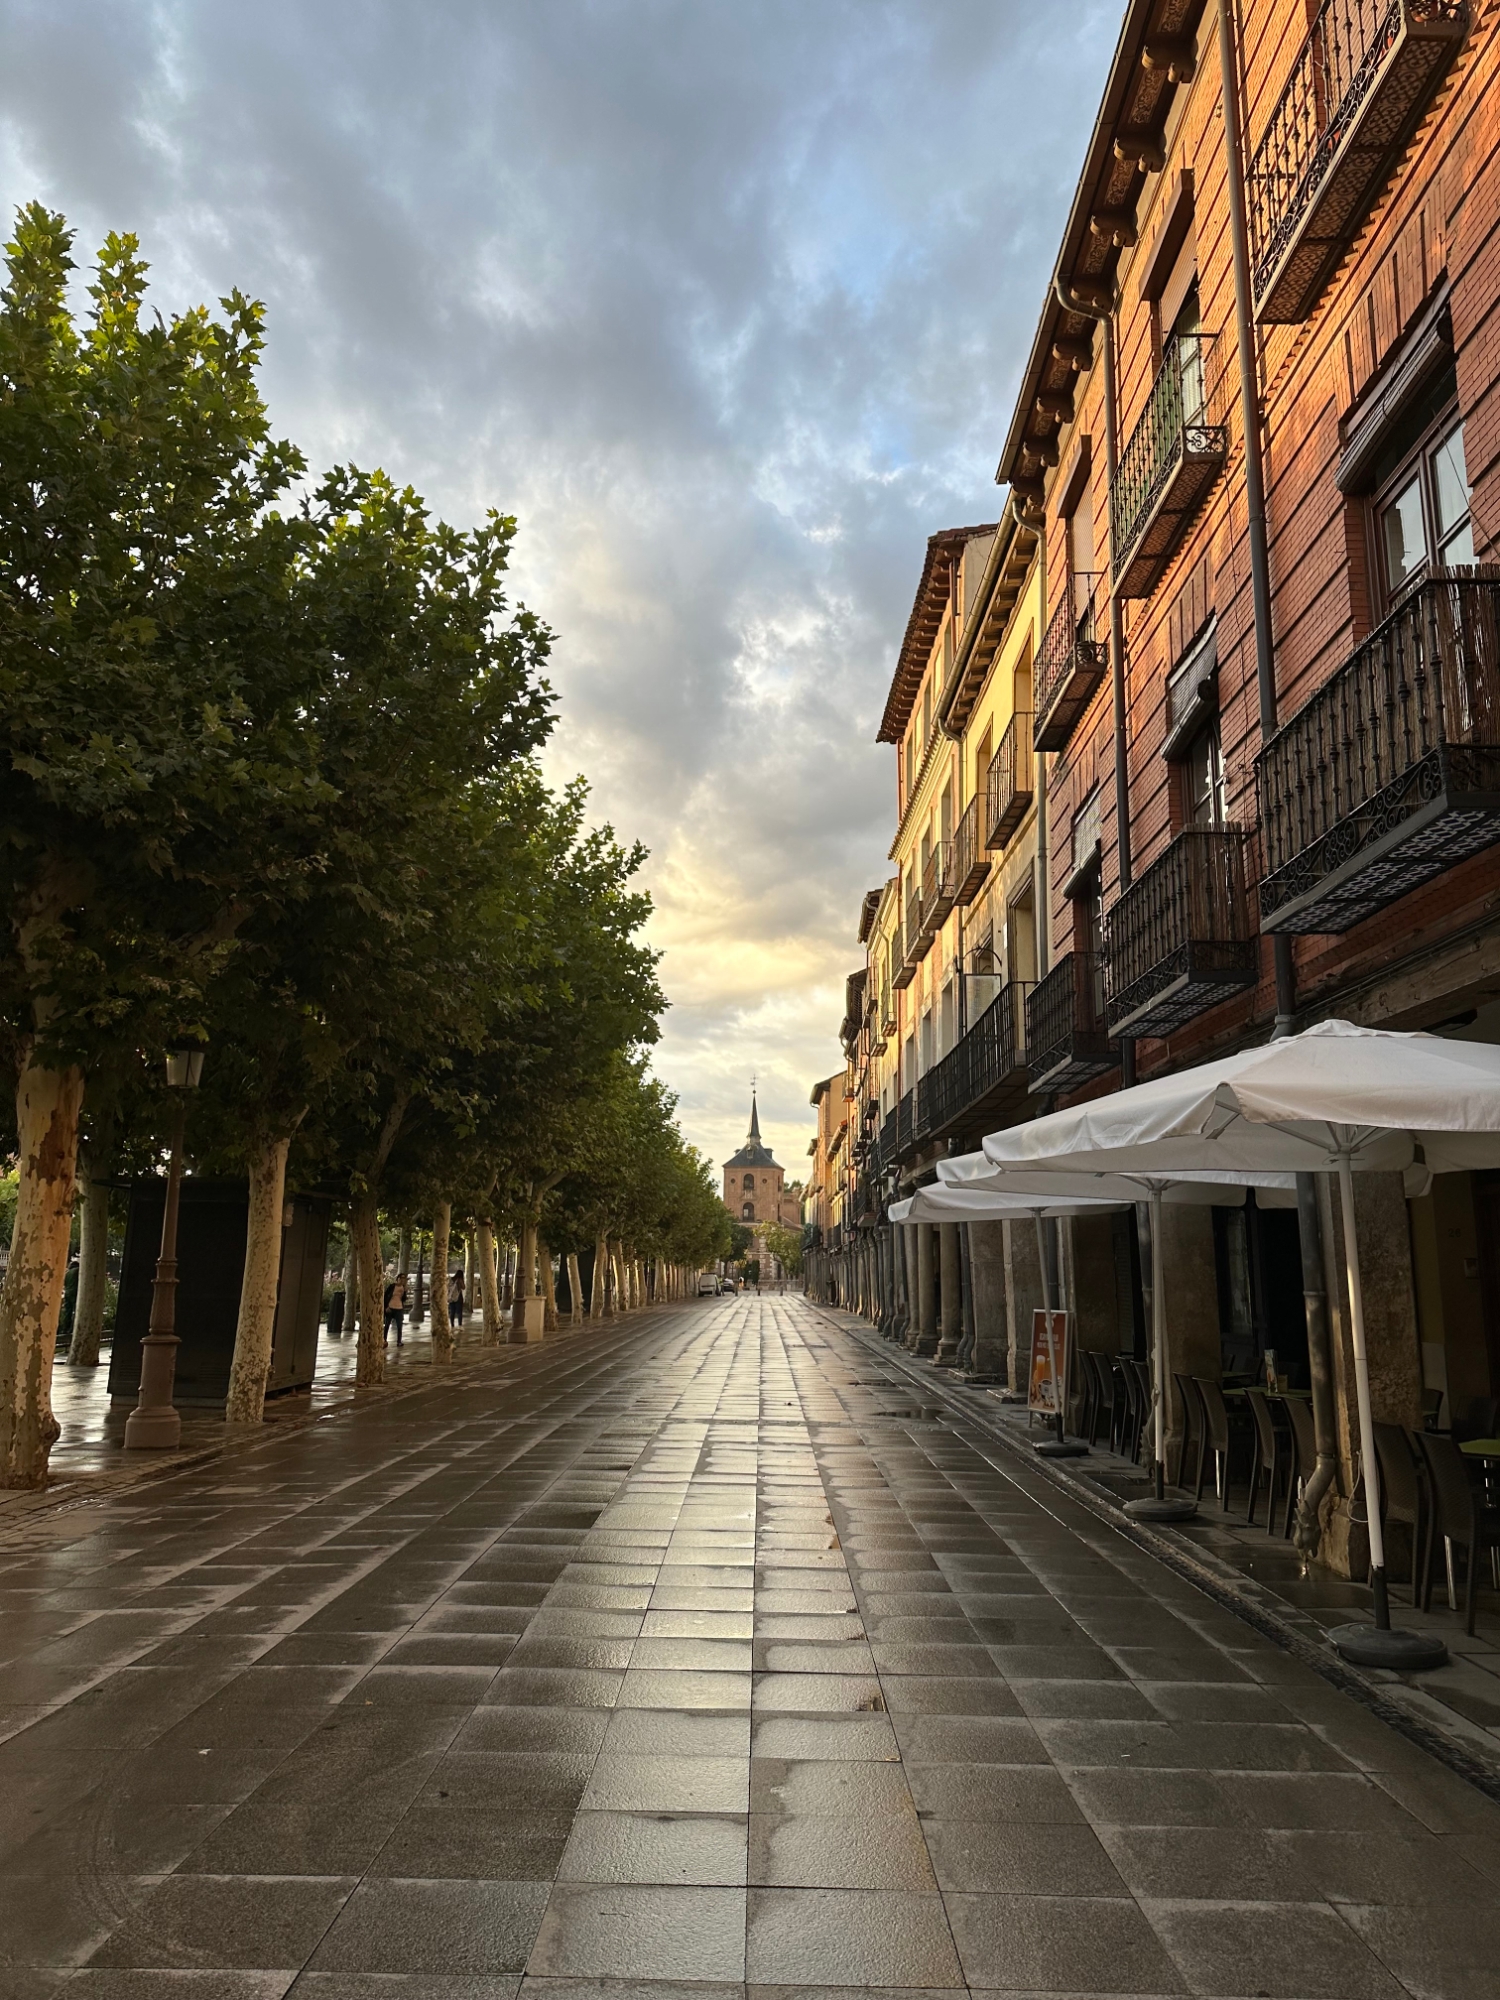 Street in Spain.